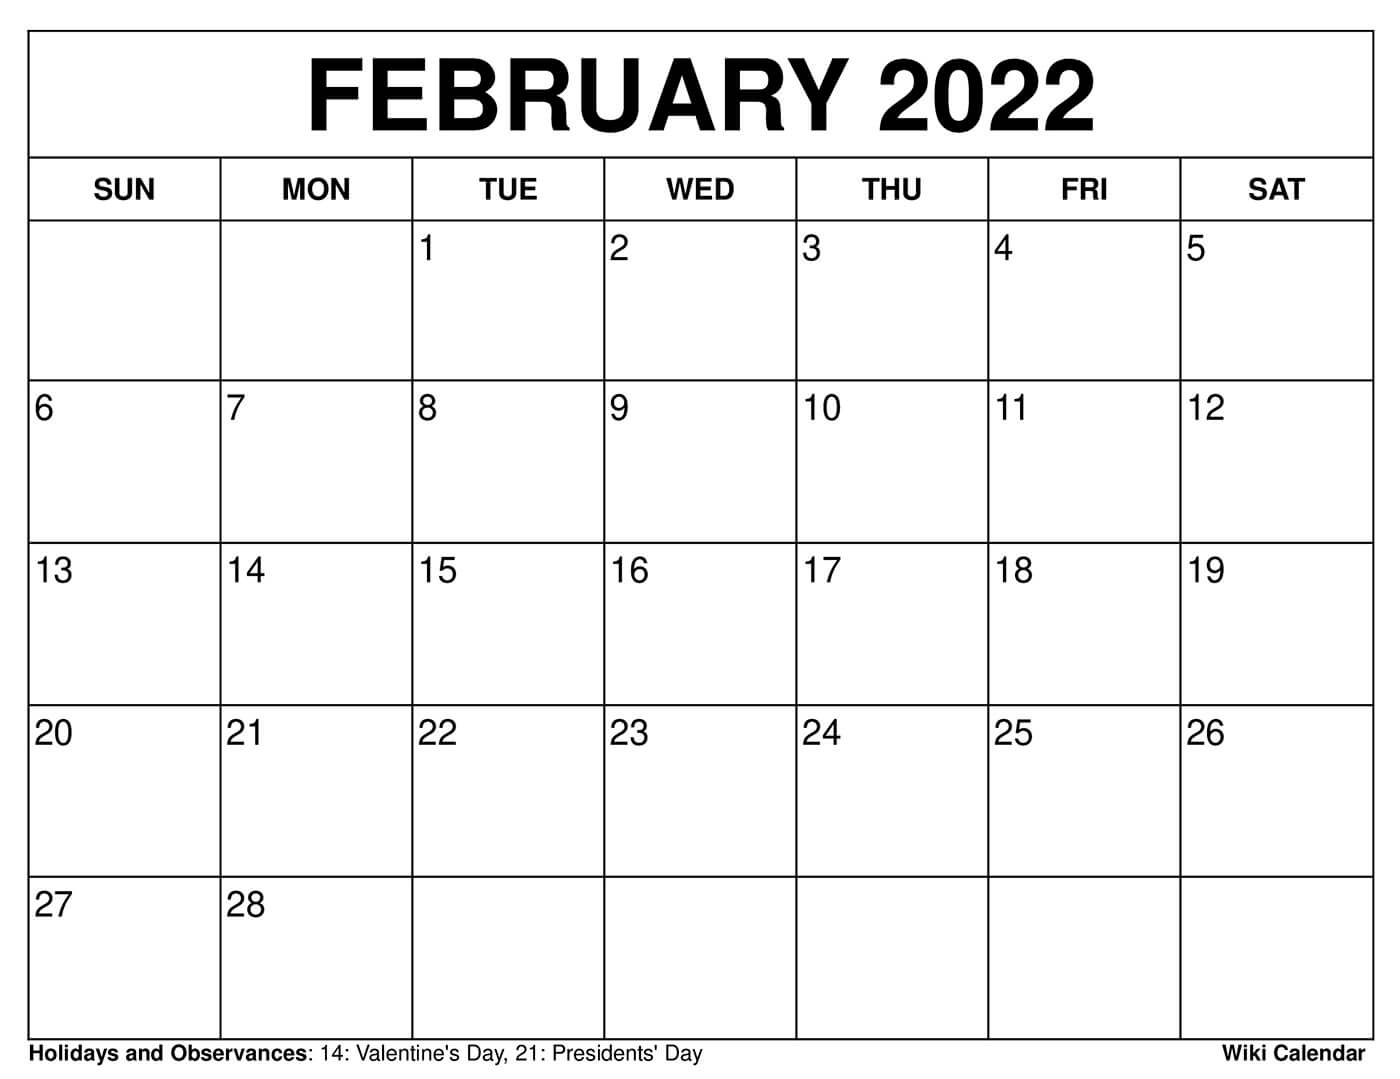 February 2022 Calendar Pdf Free Printable February 2022 Calendars - Wiki Calendar